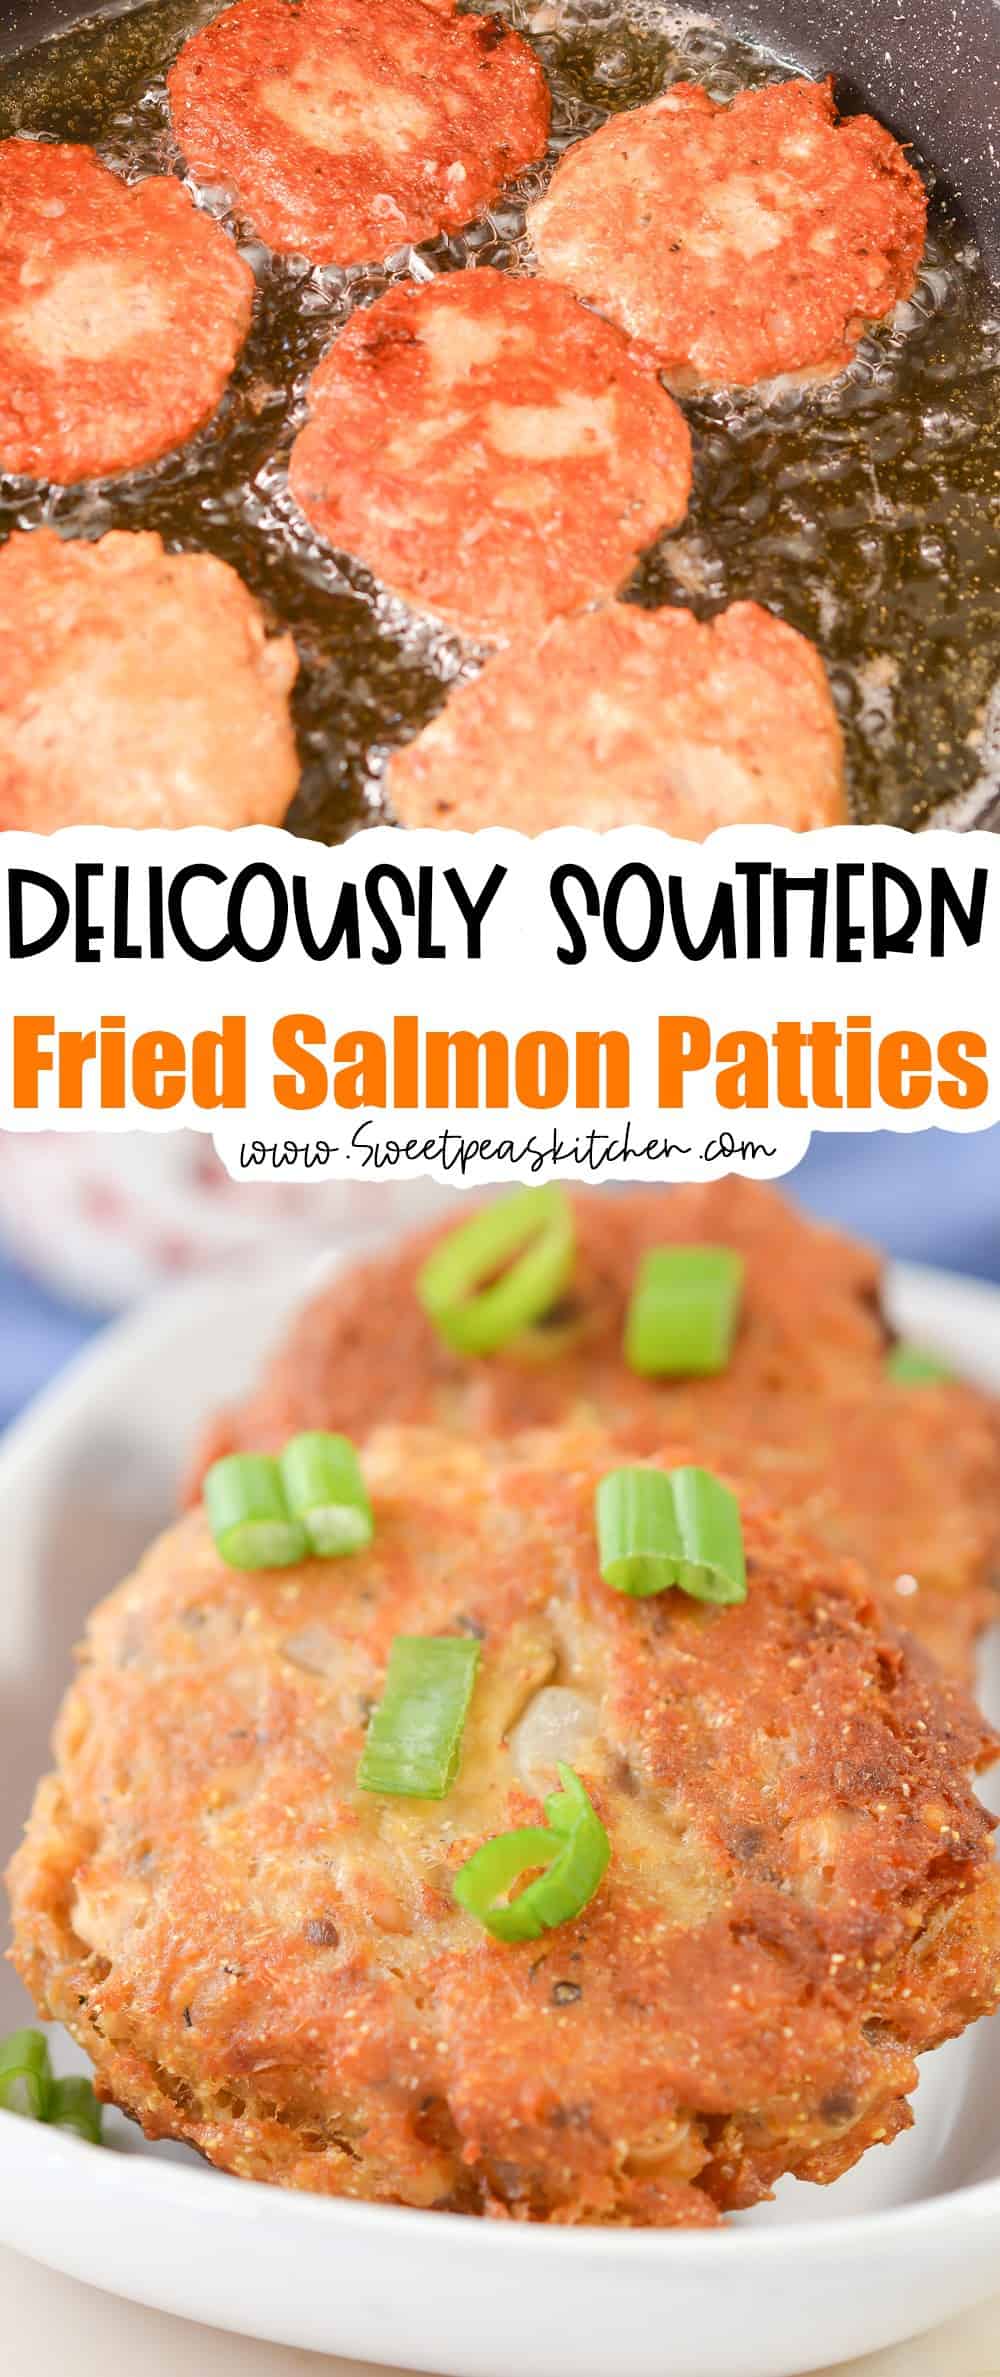 Southern Fried Salmon Patties pinterest